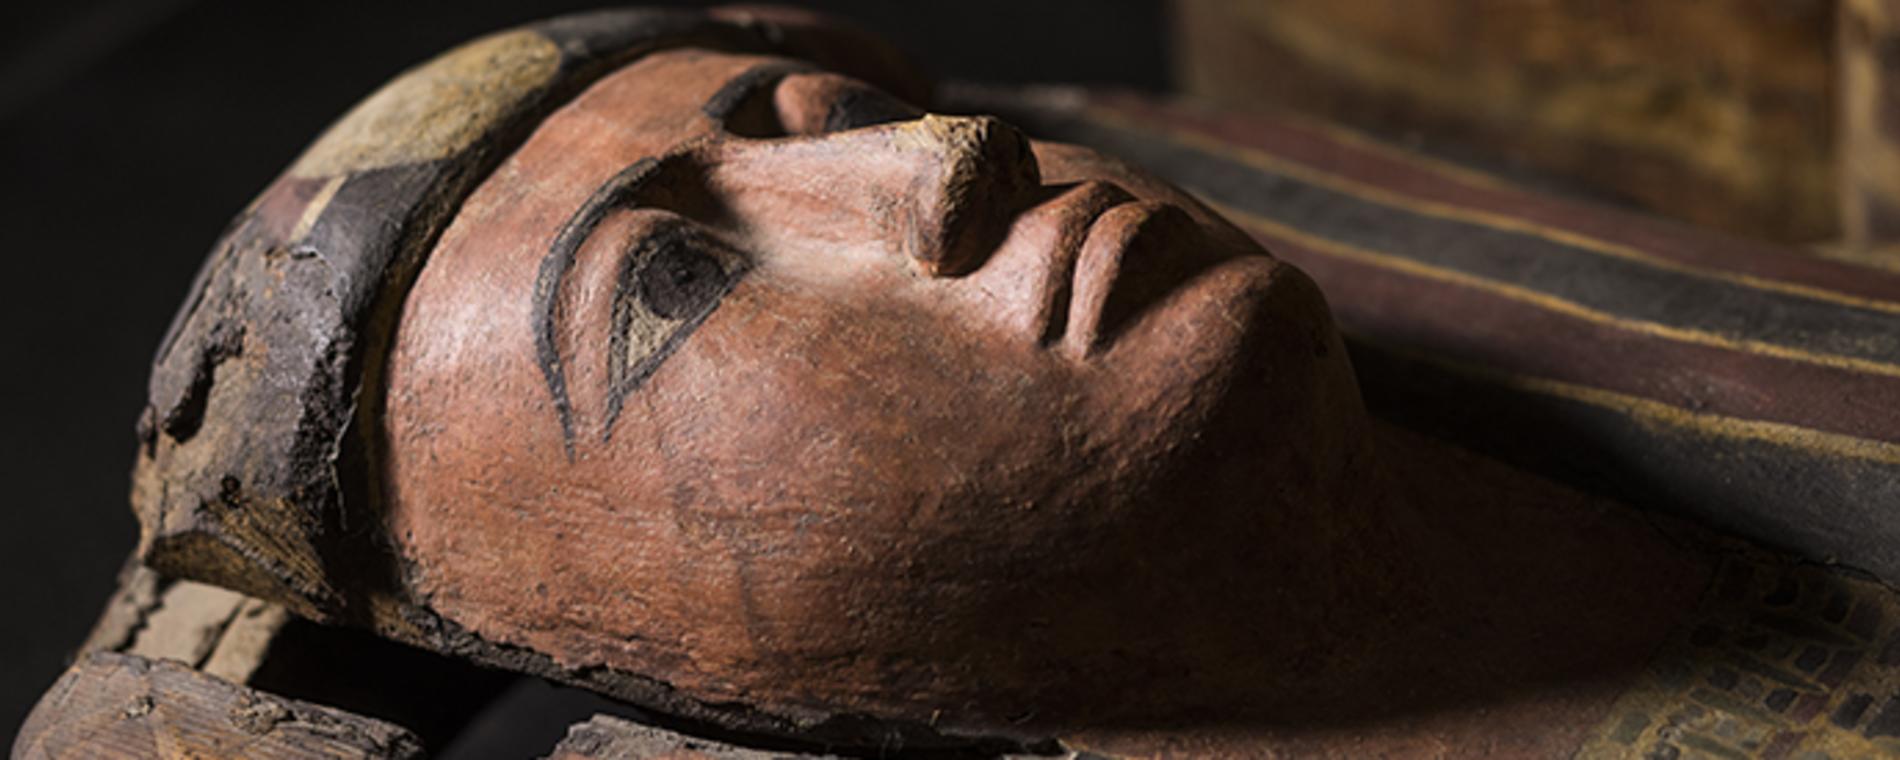 Egyptian Coffin